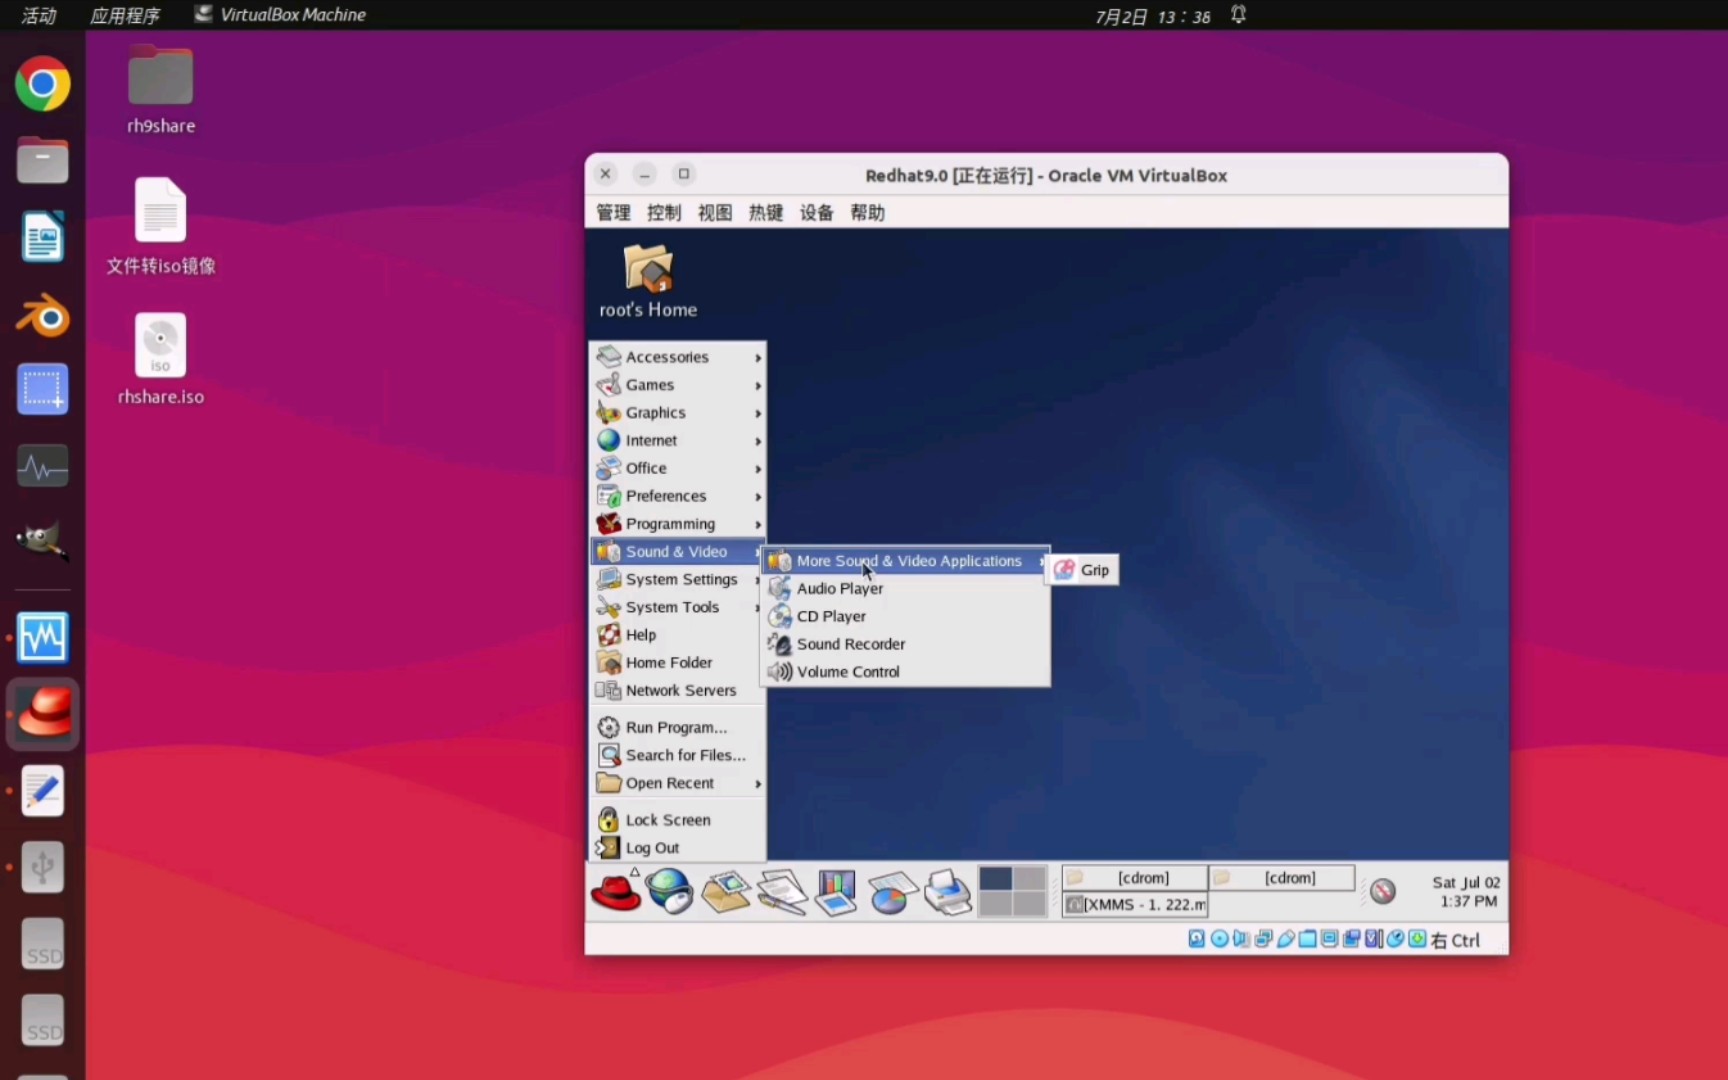 redhat9.0 linux系统，接触linux的第一个操作系统。